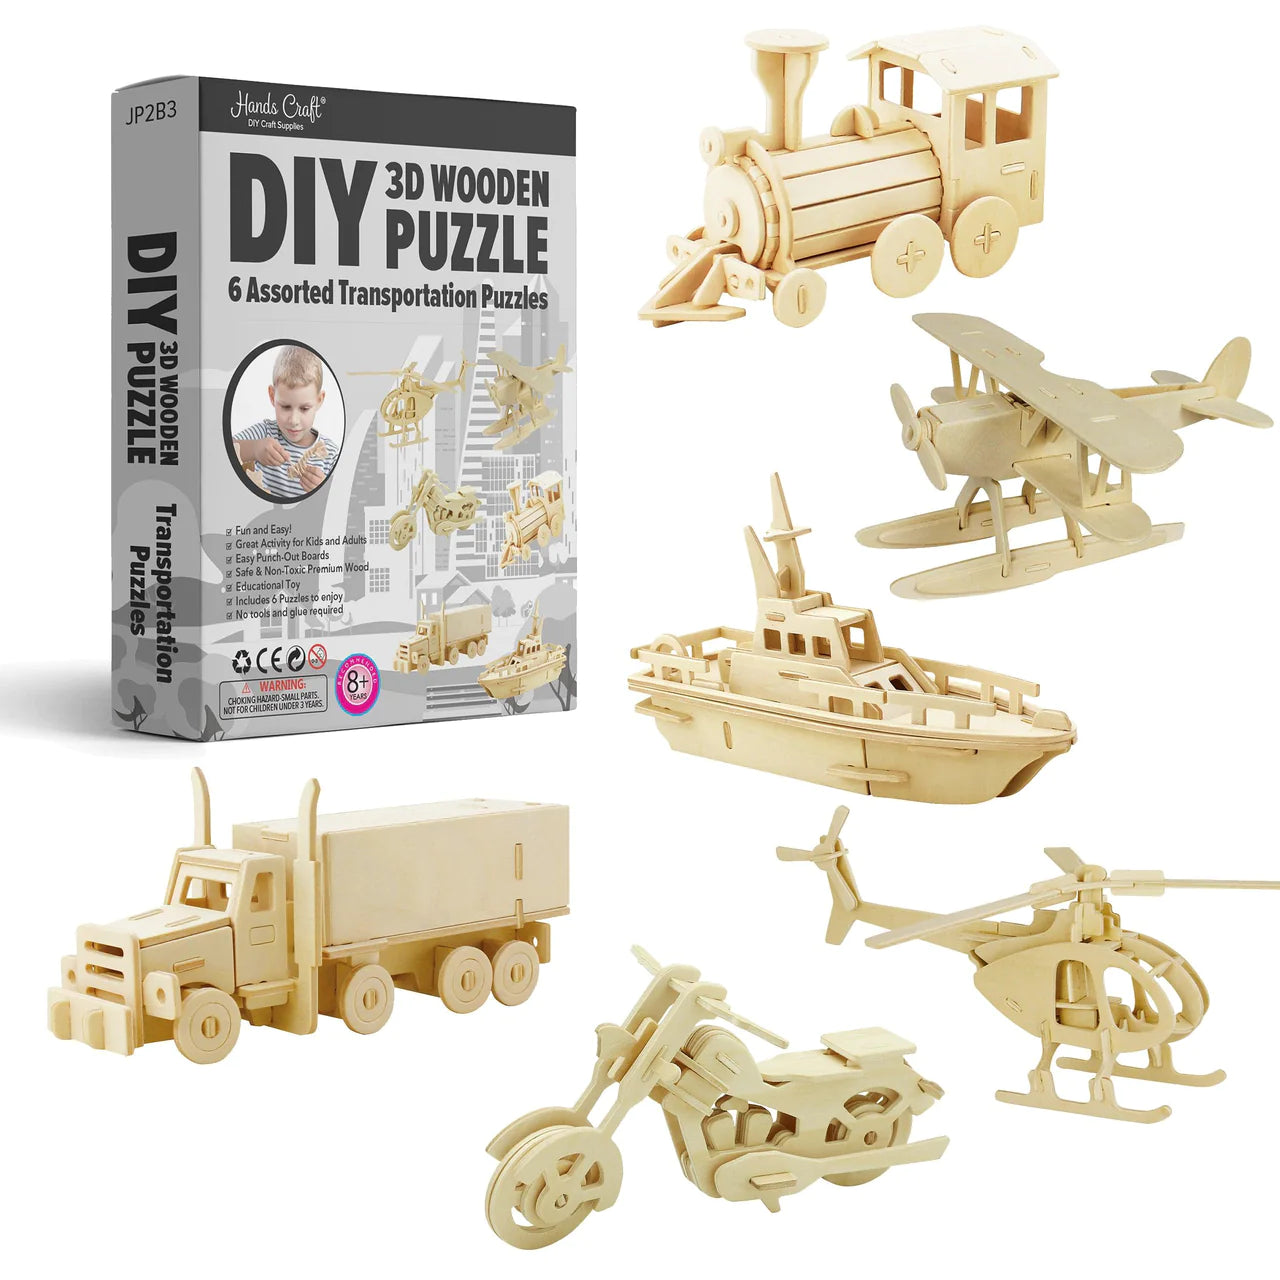 3D Wooden Puzzles